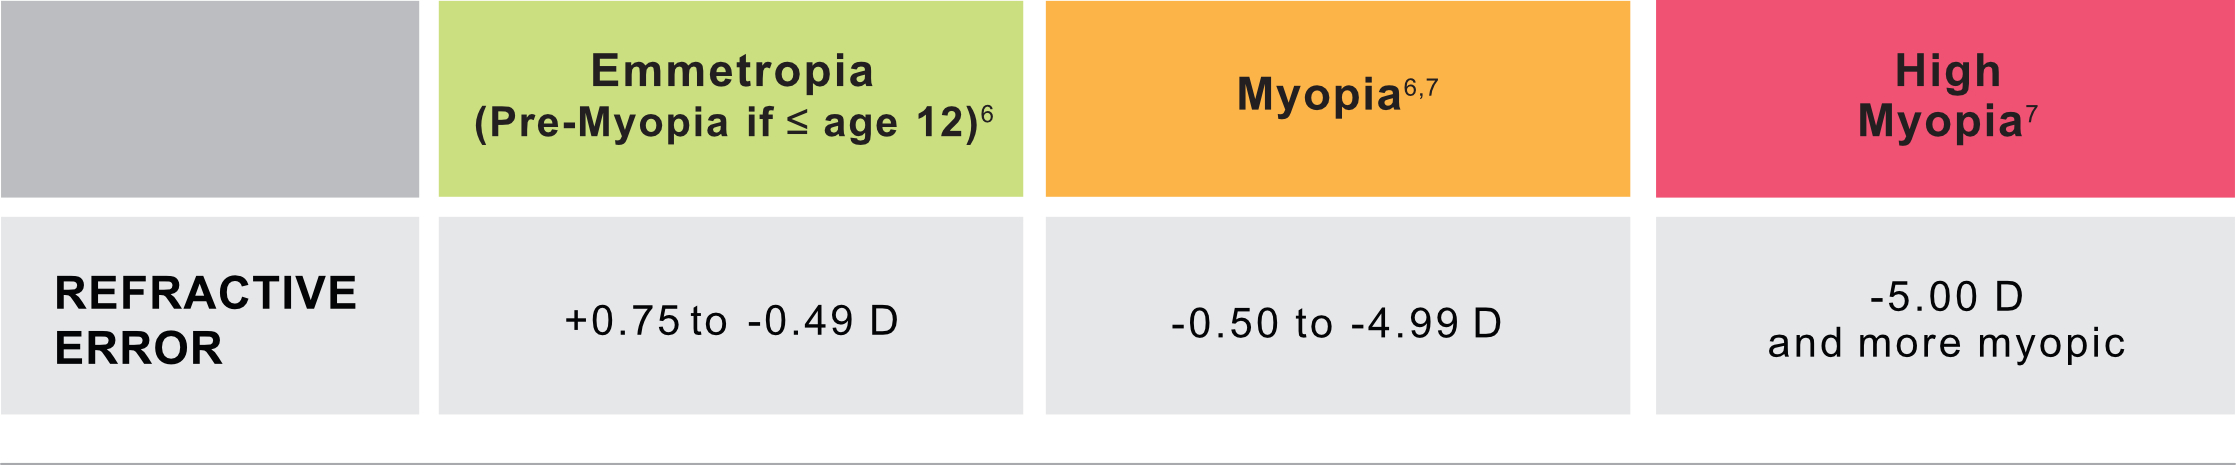 Classification of Myopia